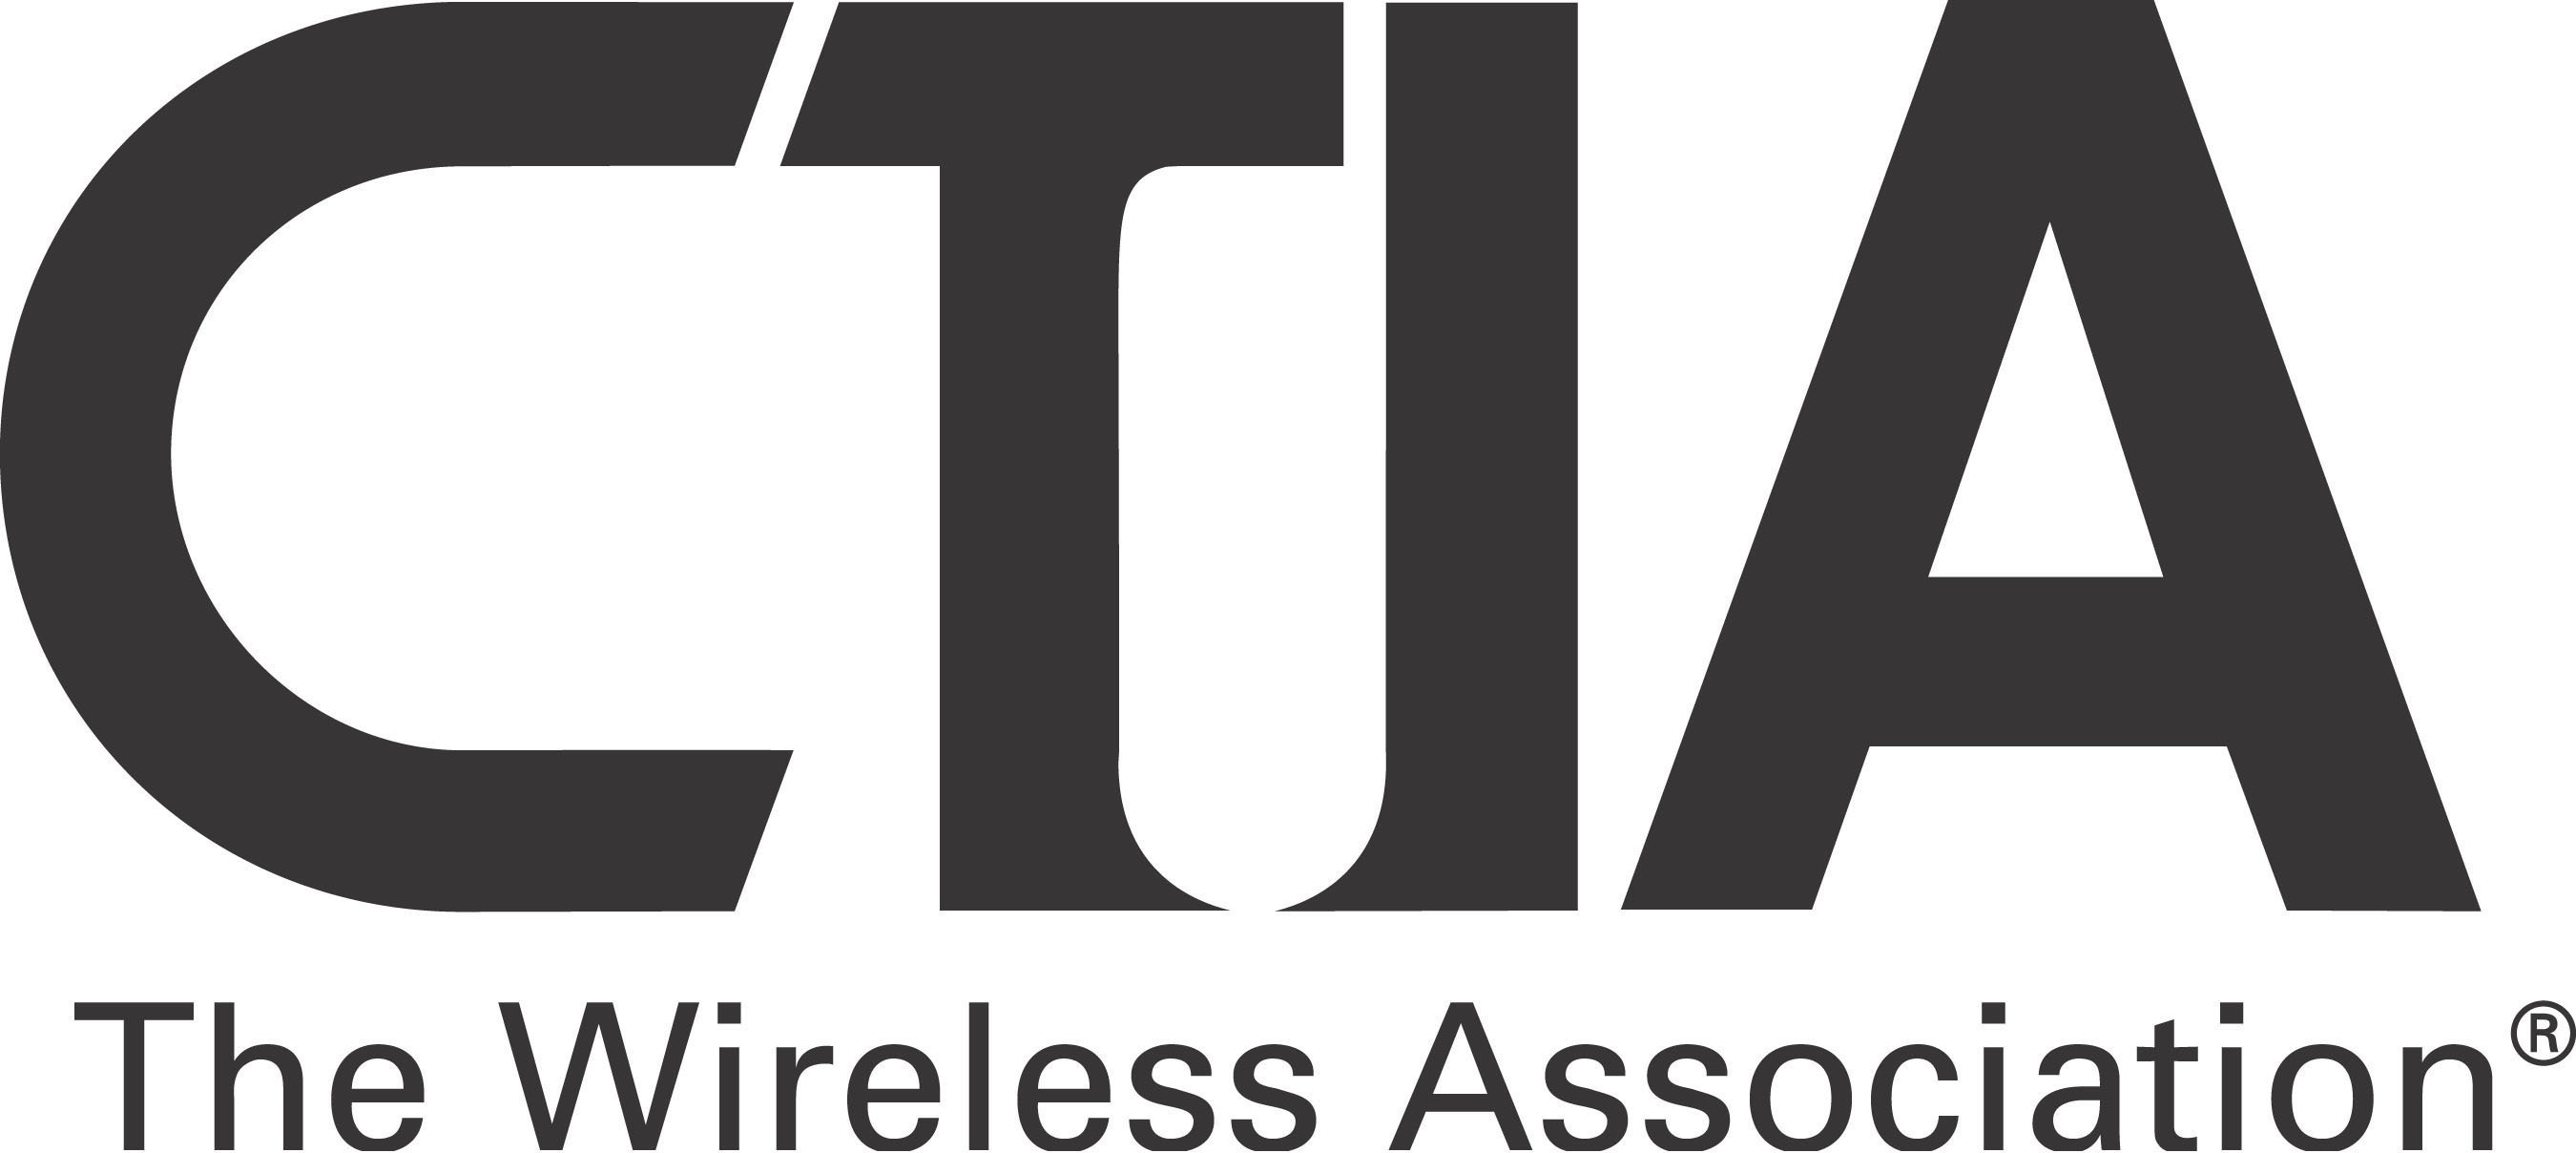 CTIA: The Wireless Association Logo